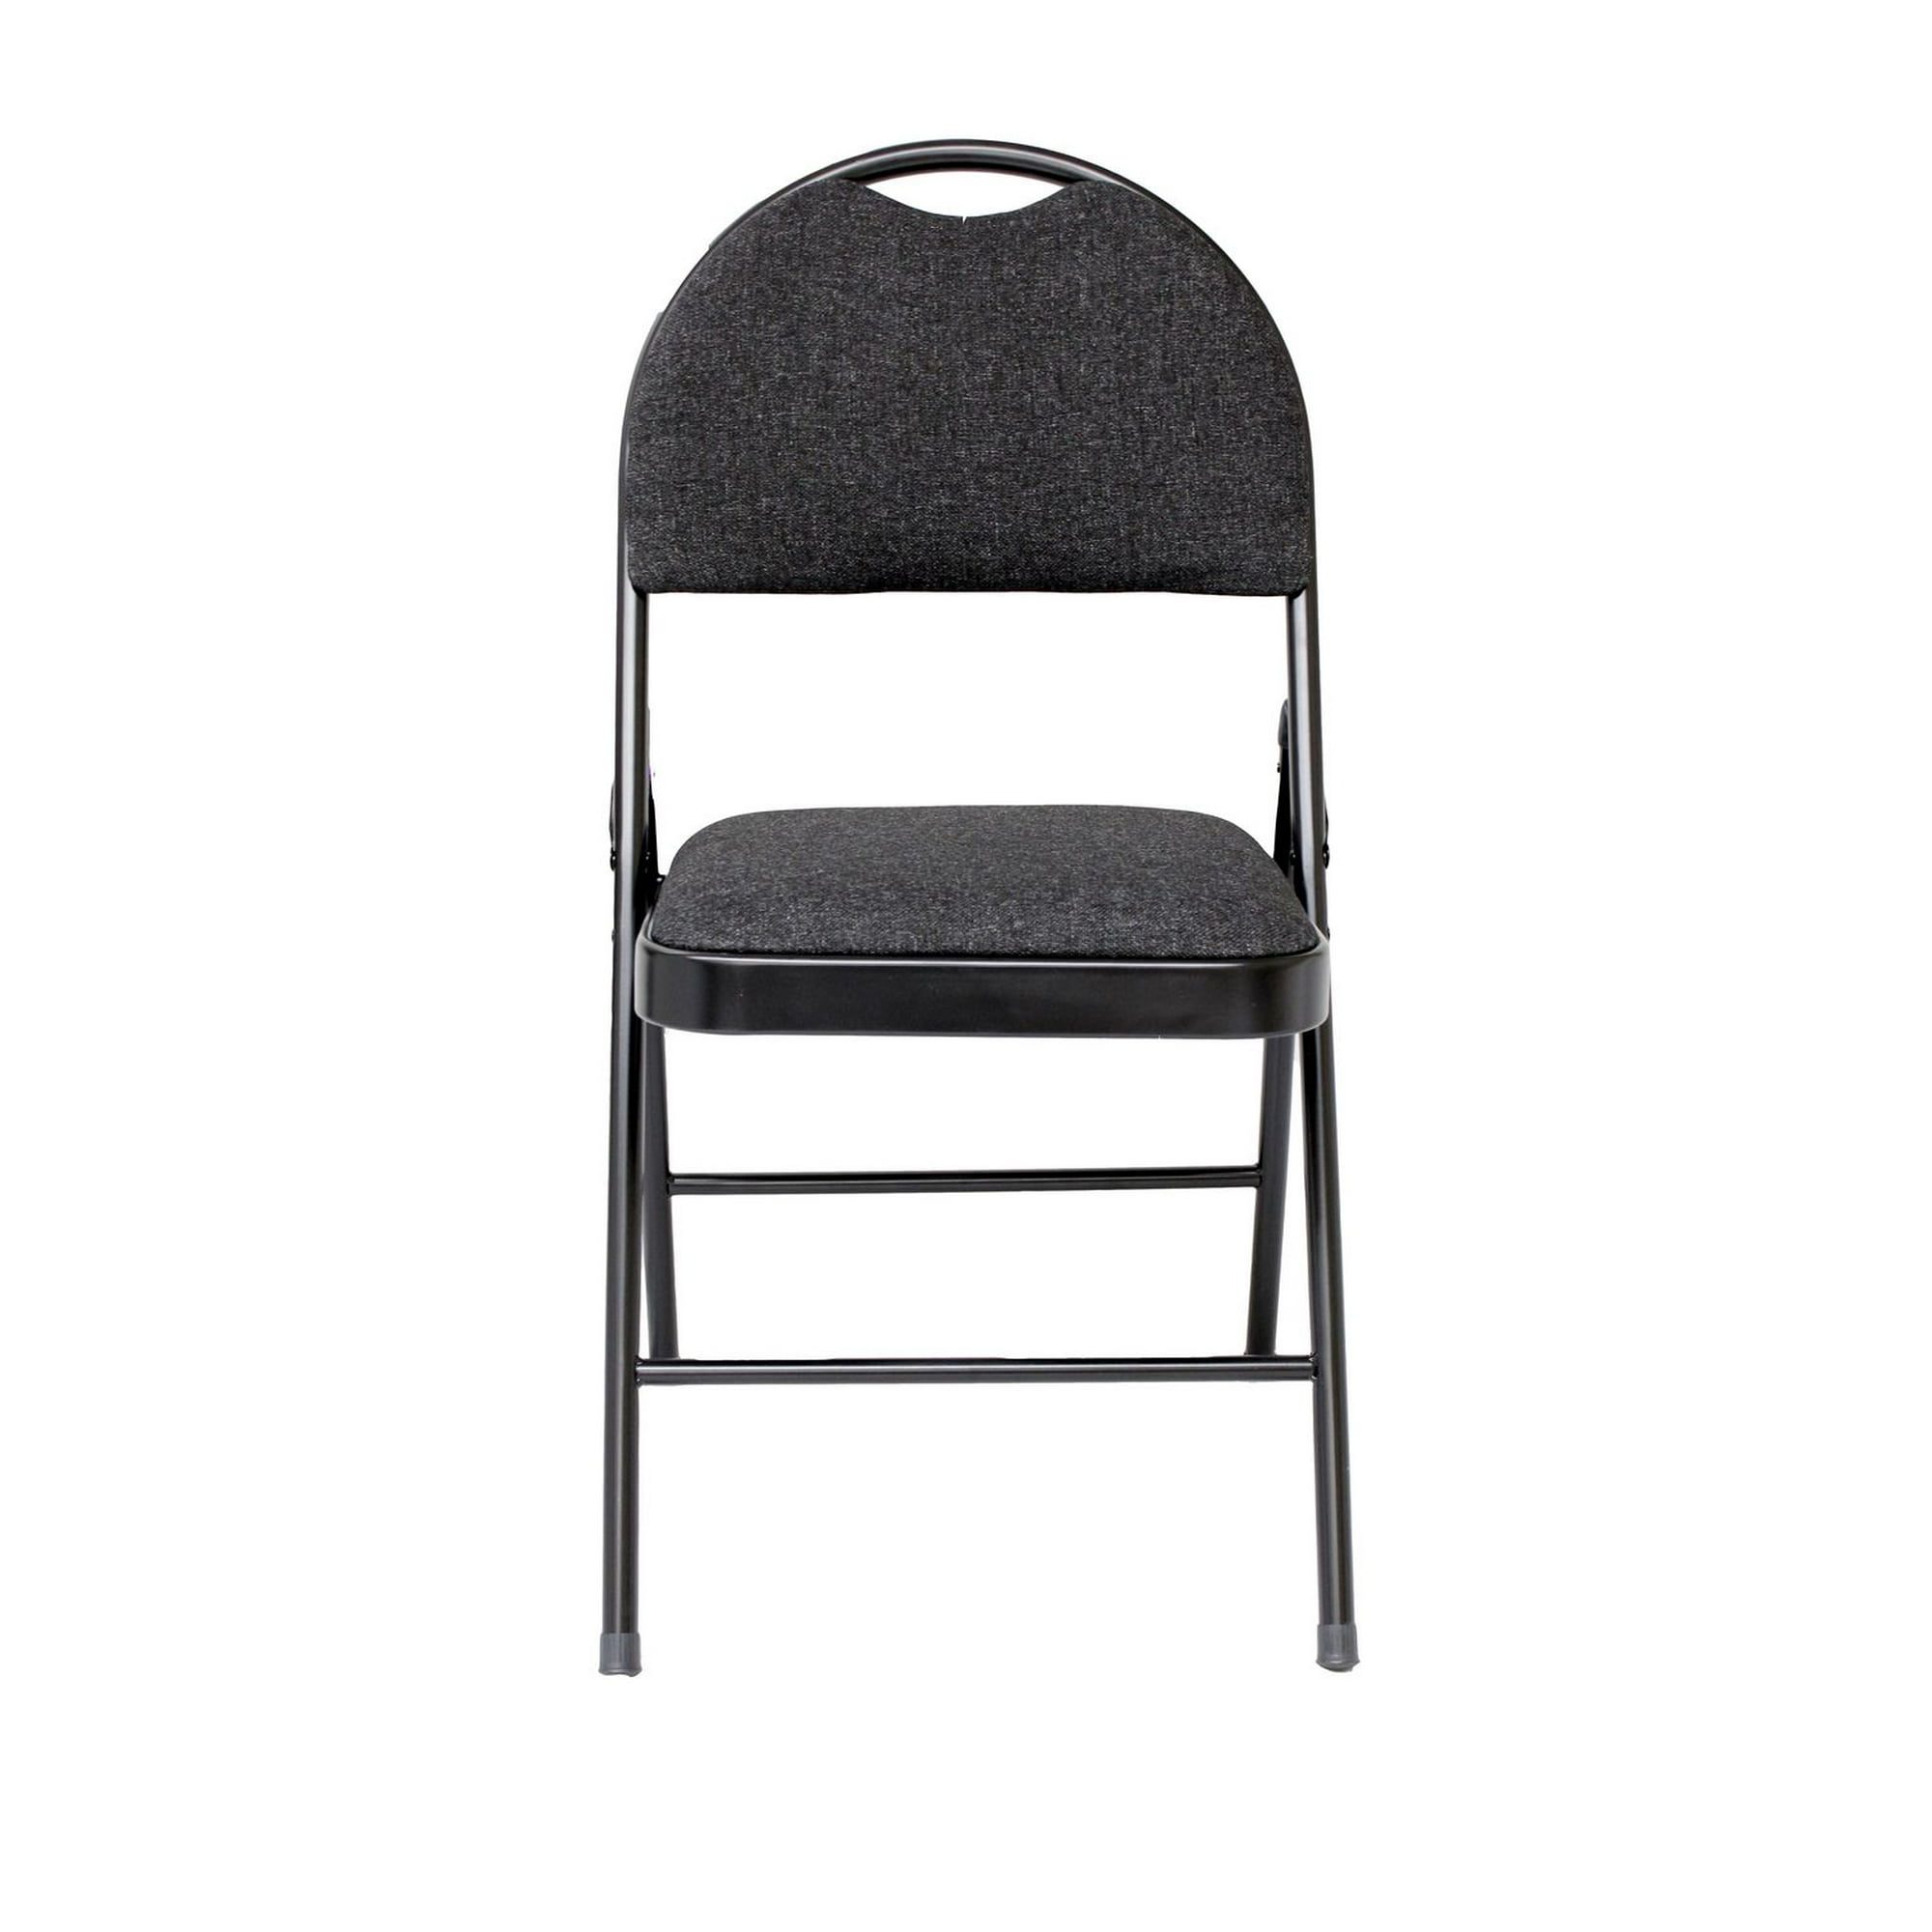 Mainstays Fabric Folding Chair, Comfortable fabric folding chair 